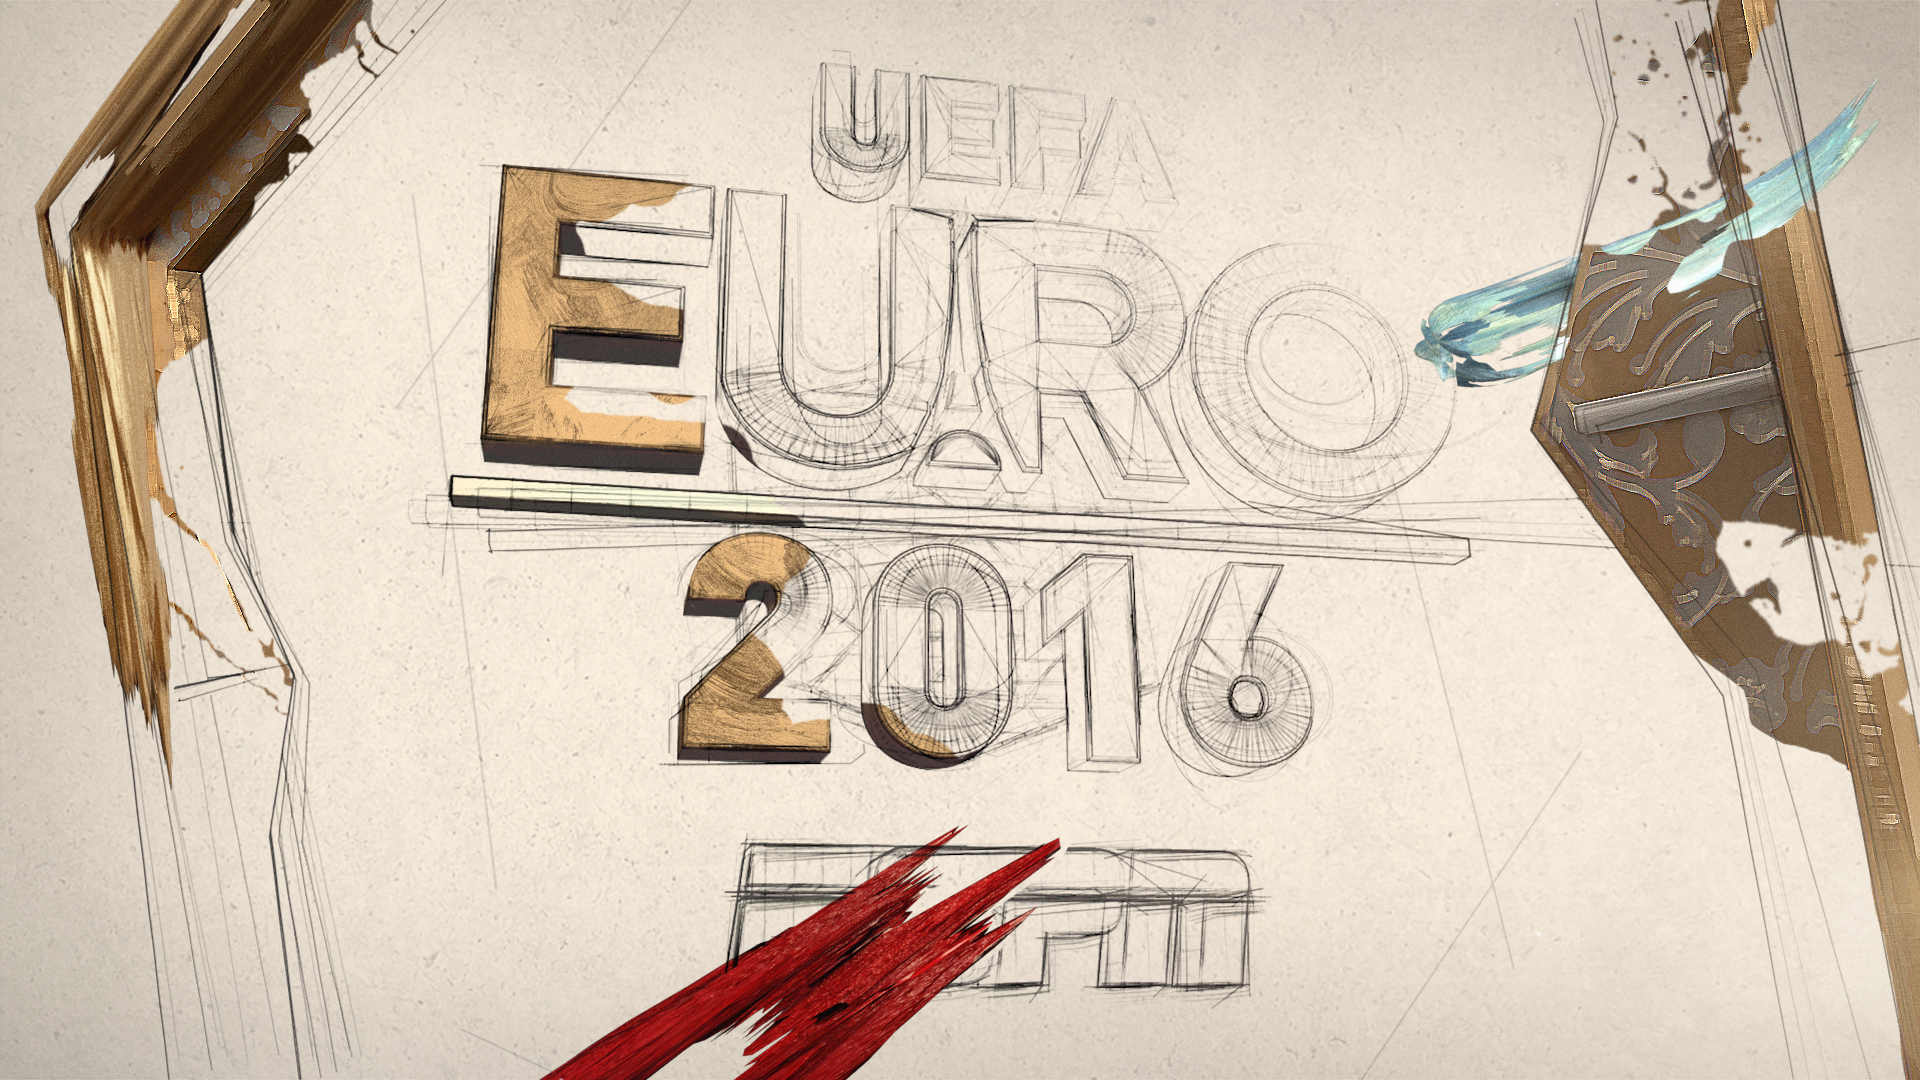 espn_EURO_logo_f01_v2